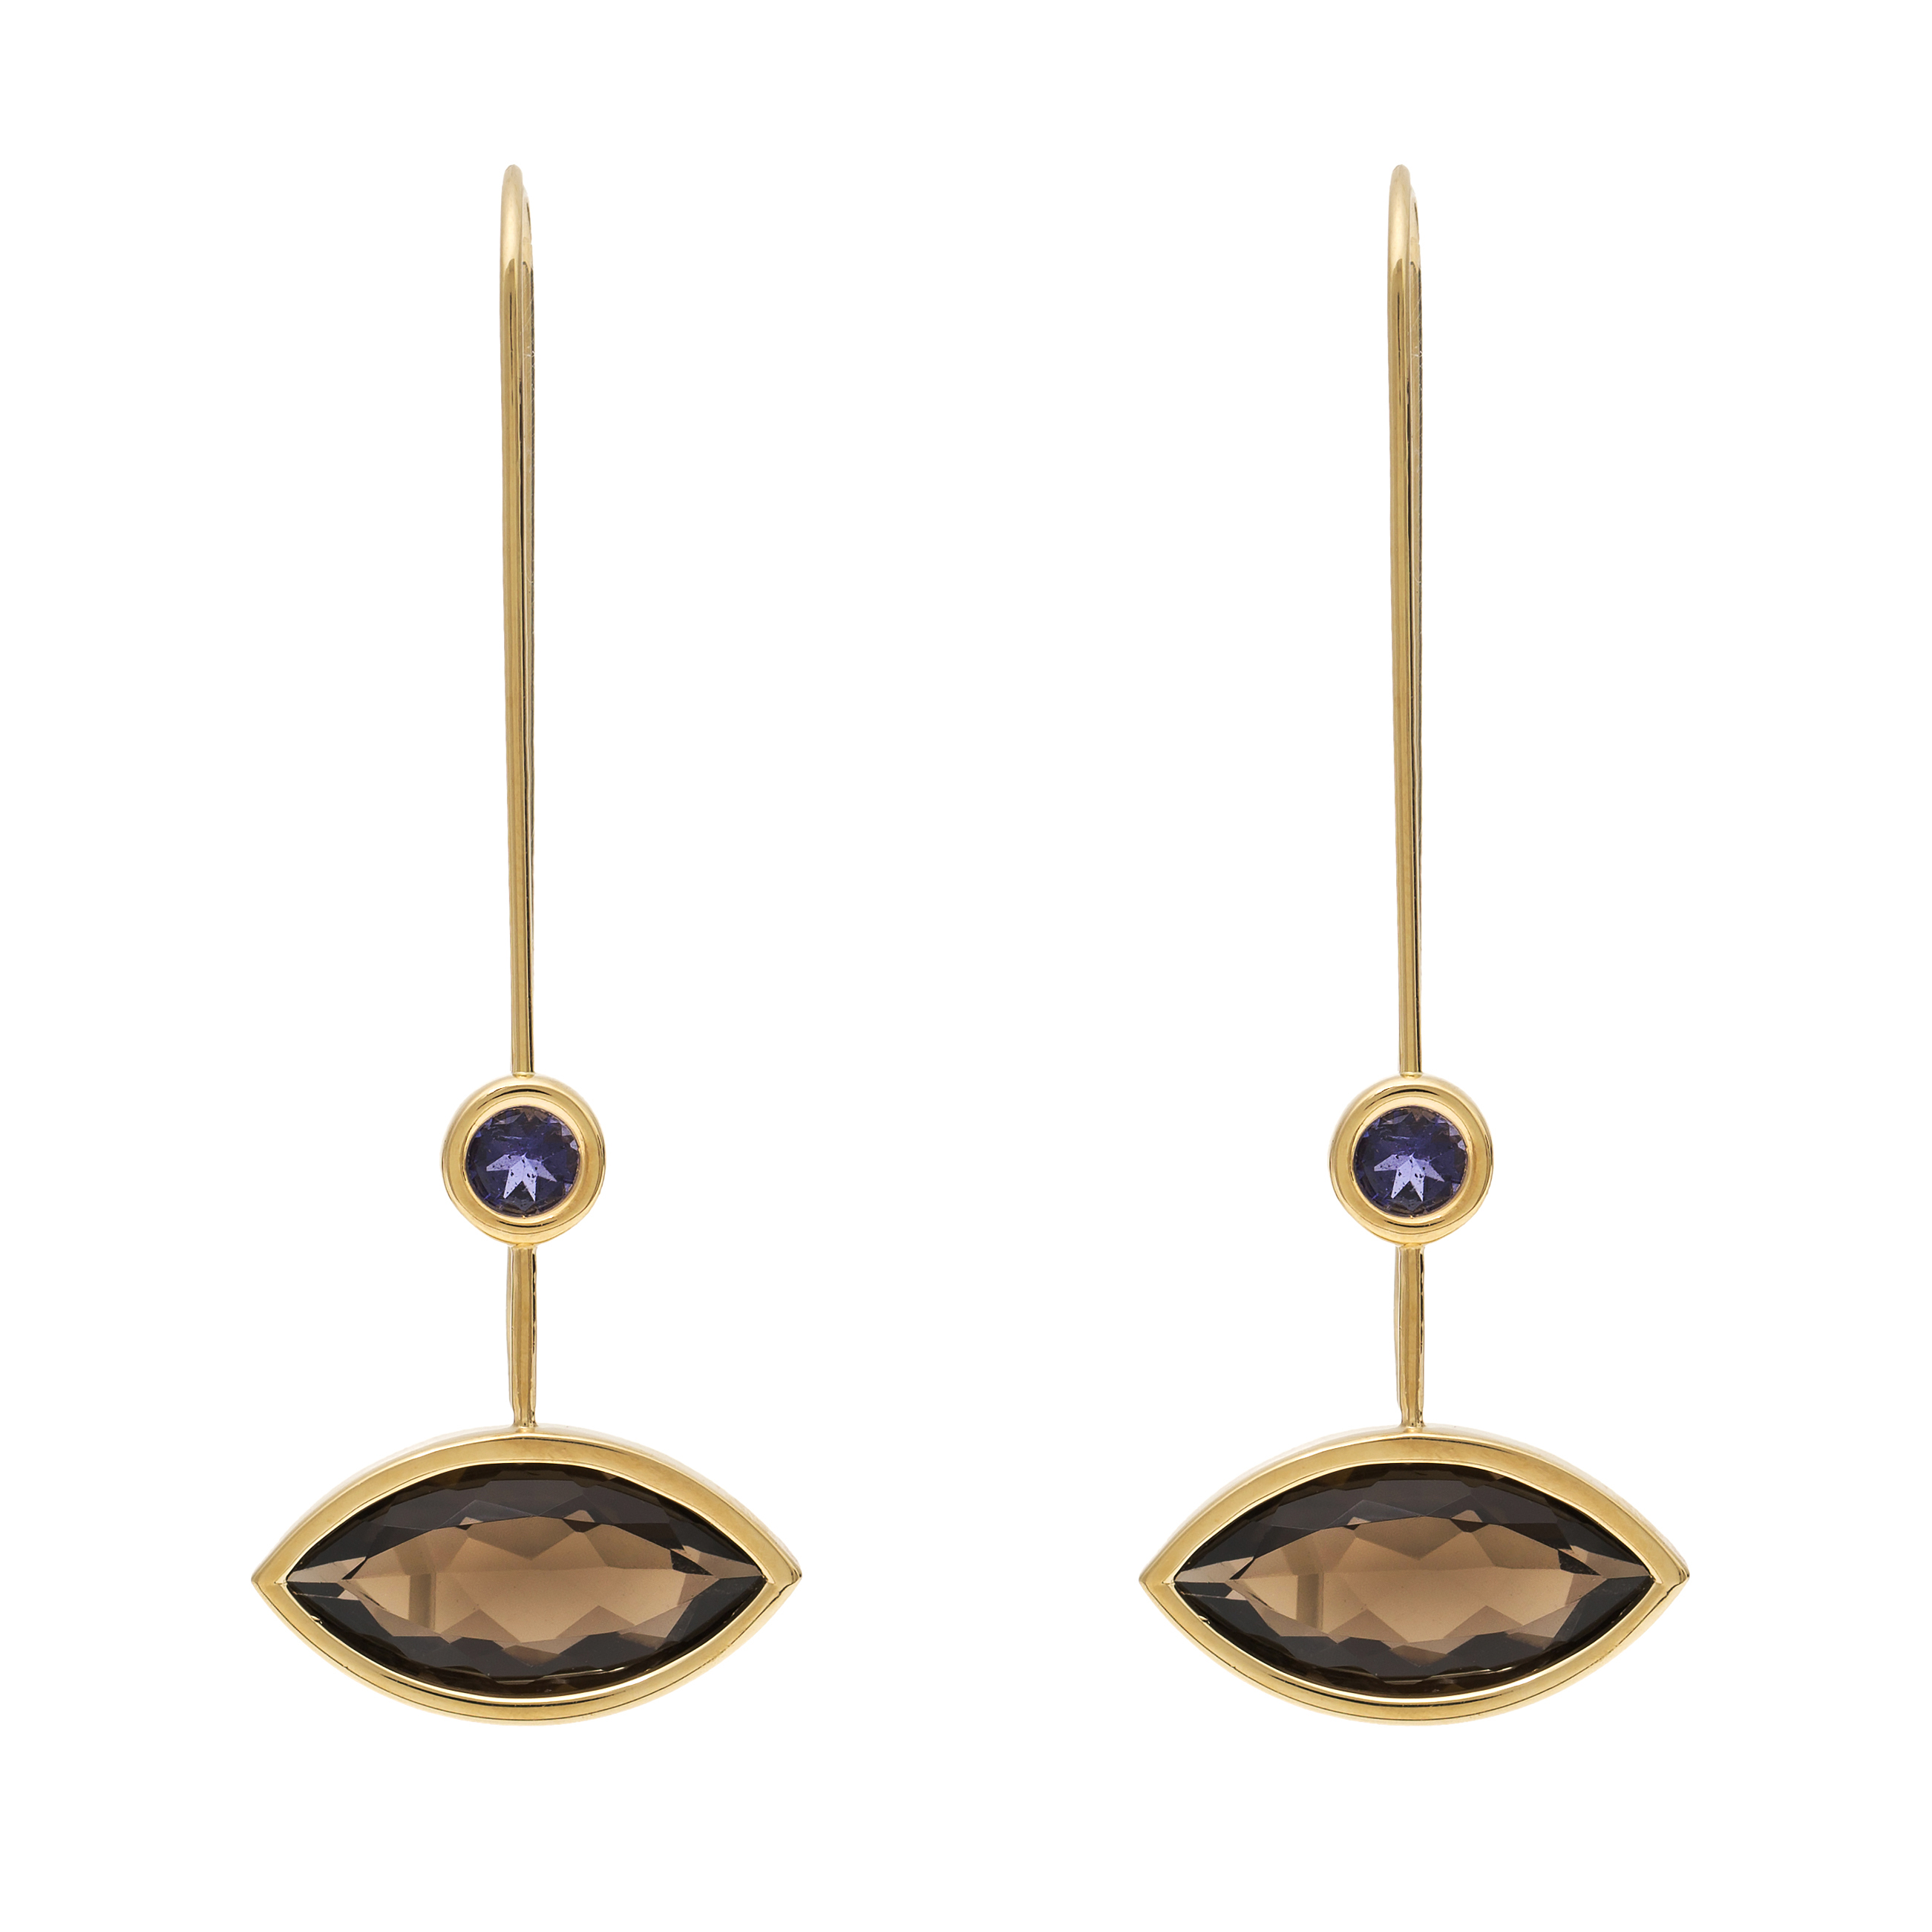 Ana Piazza Jewellery Design - Earring